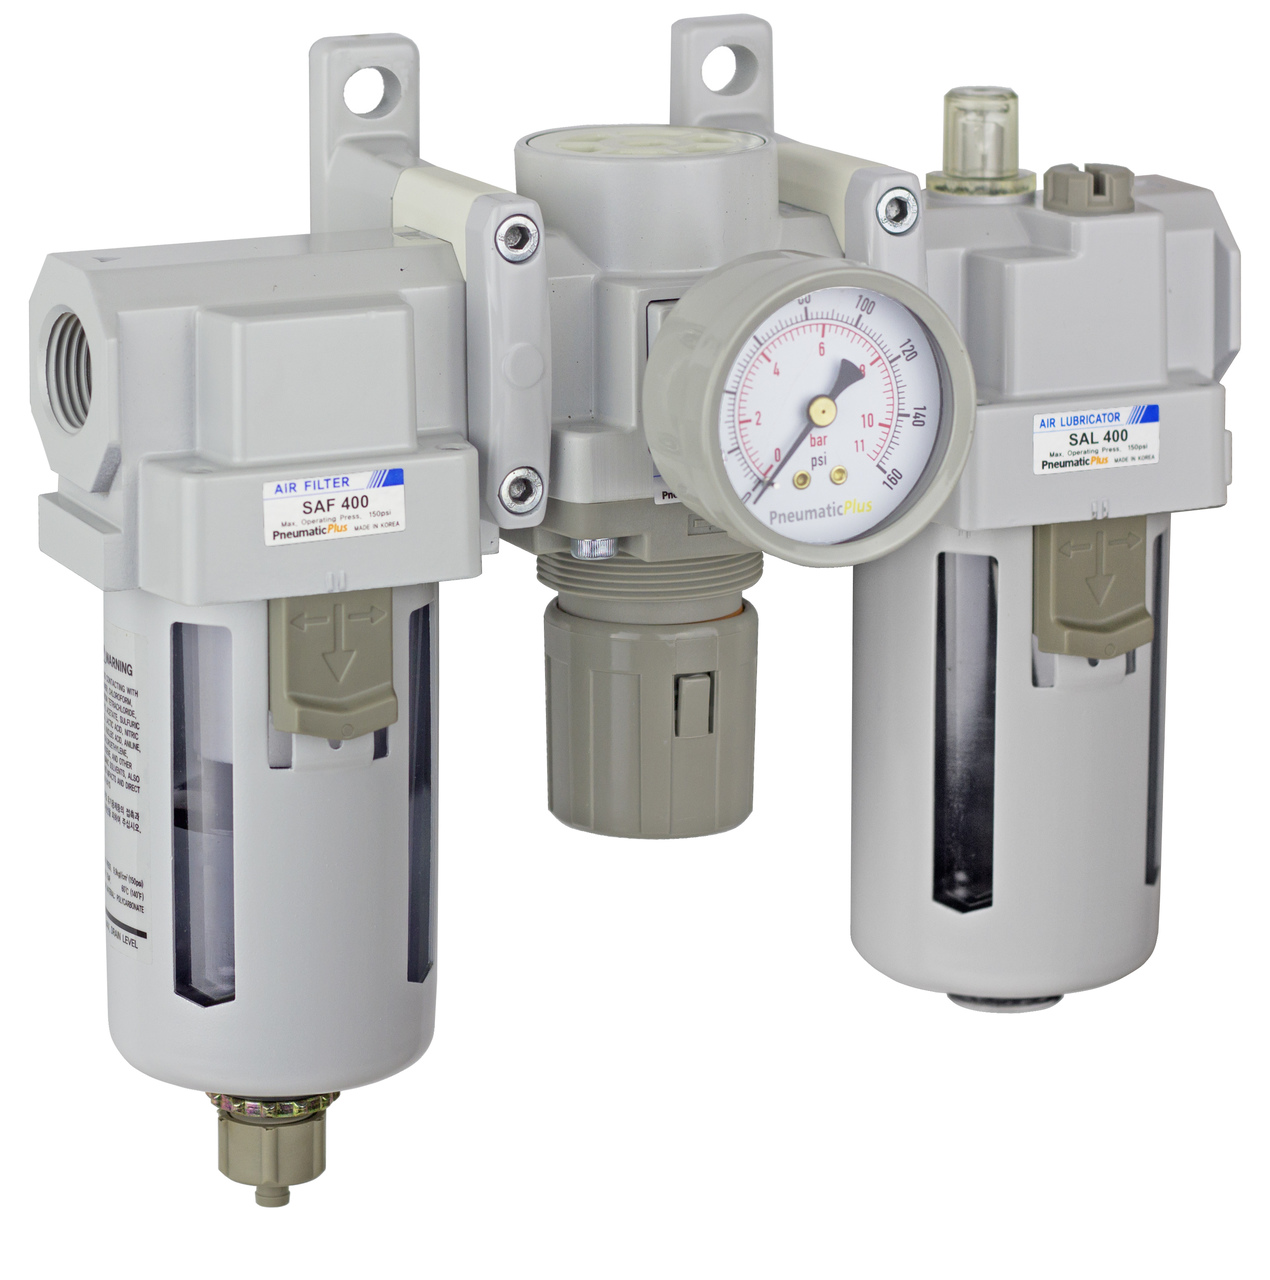 PneumaticPlus Compressed Air Filter Regulator Lubricator 1/2" NPT SAU4010M-N04G 